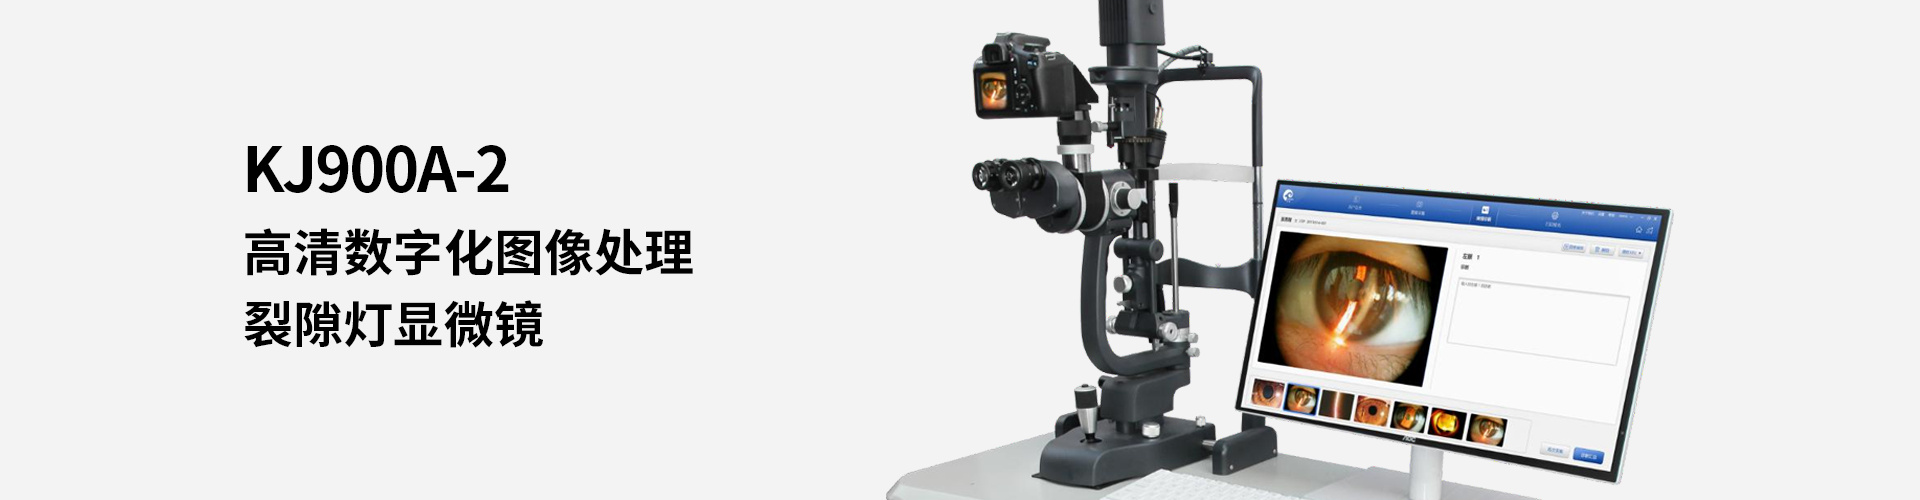 KJ900A-2高端数字化裂隙灯显微镜